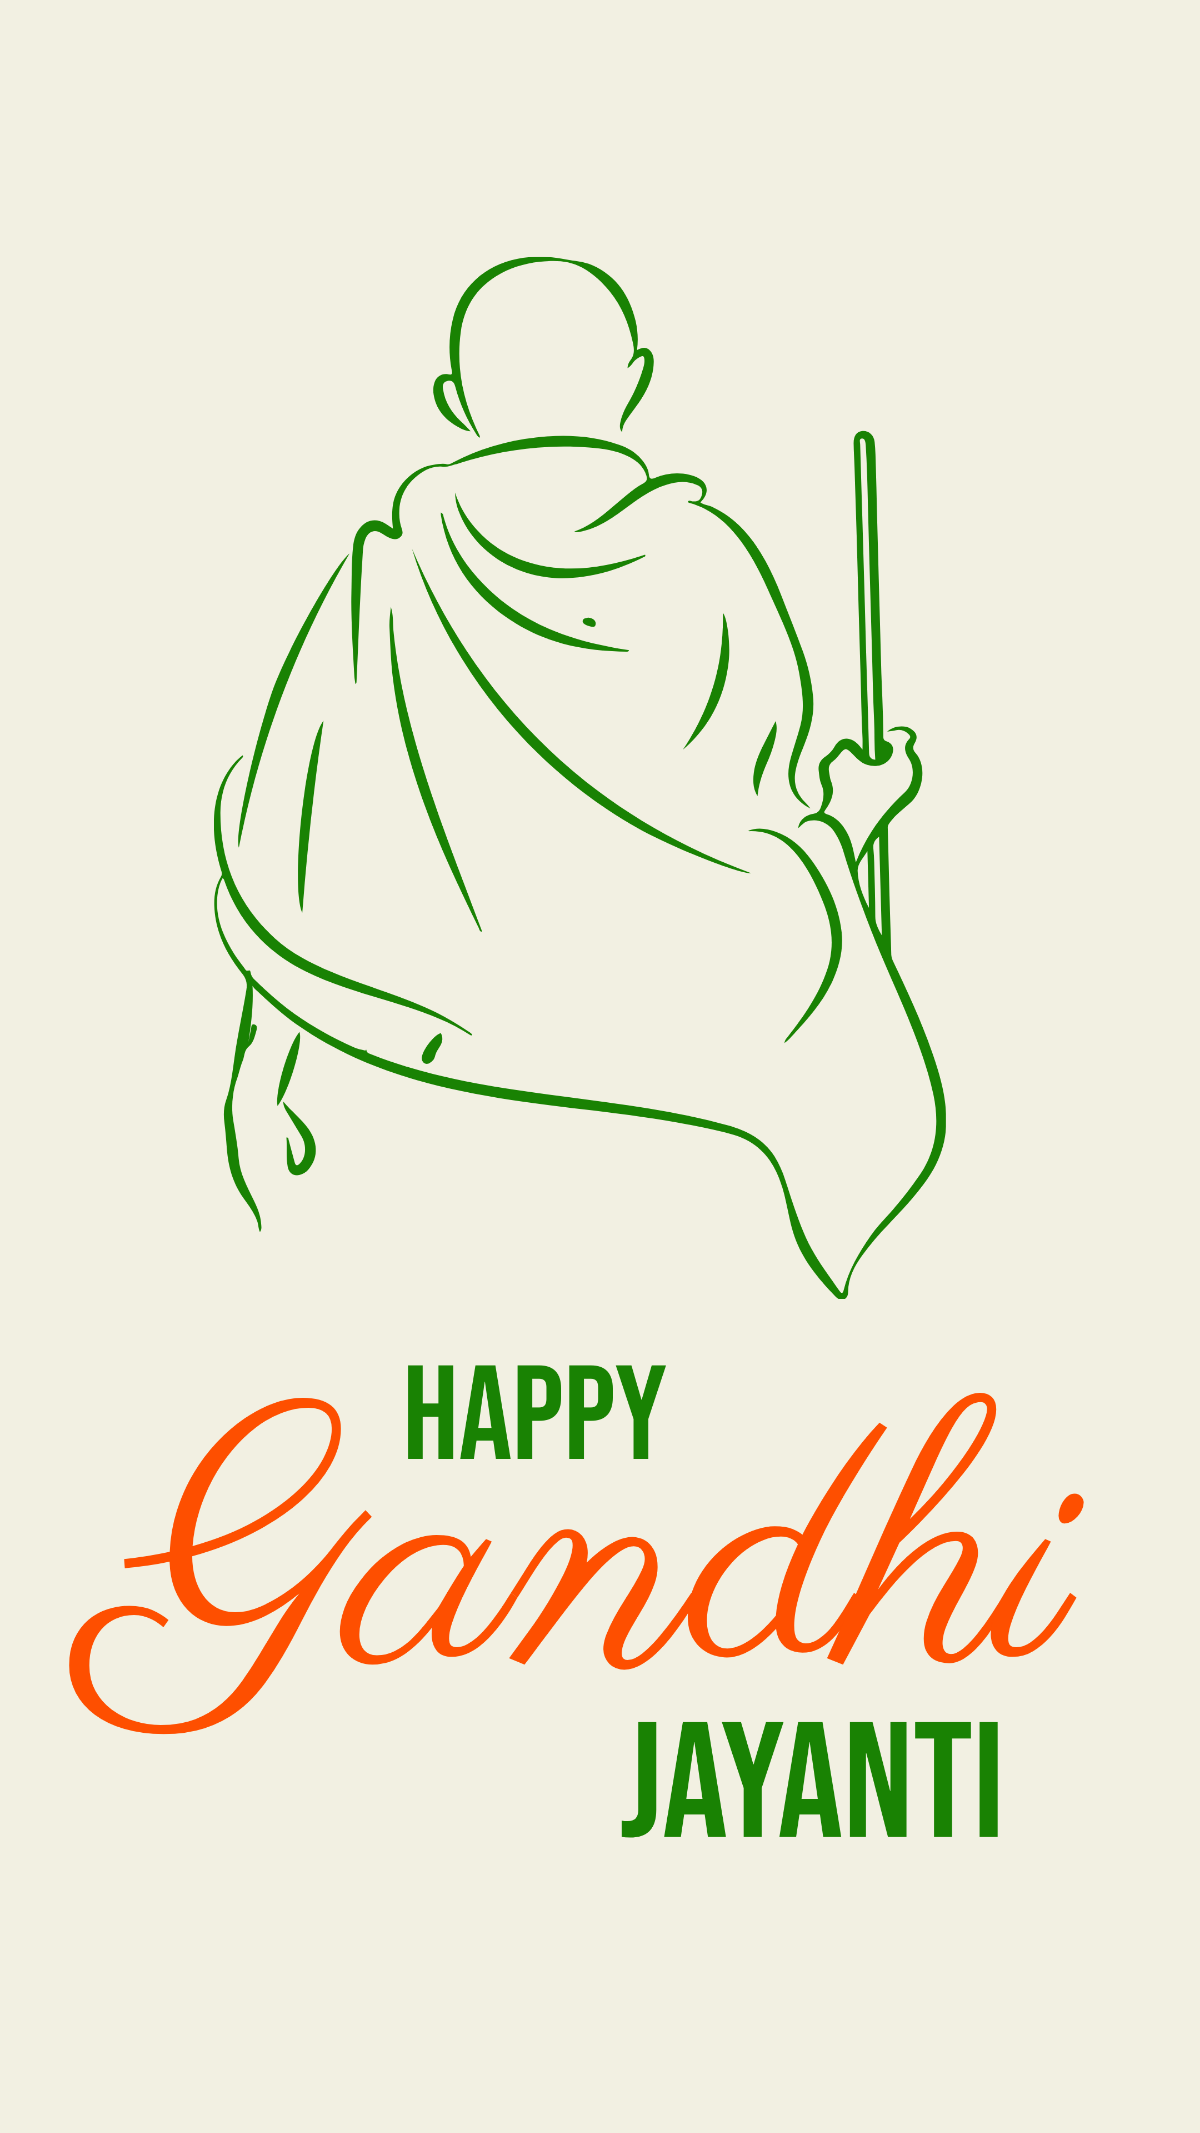 Gandhi Jayanti iPhone Background